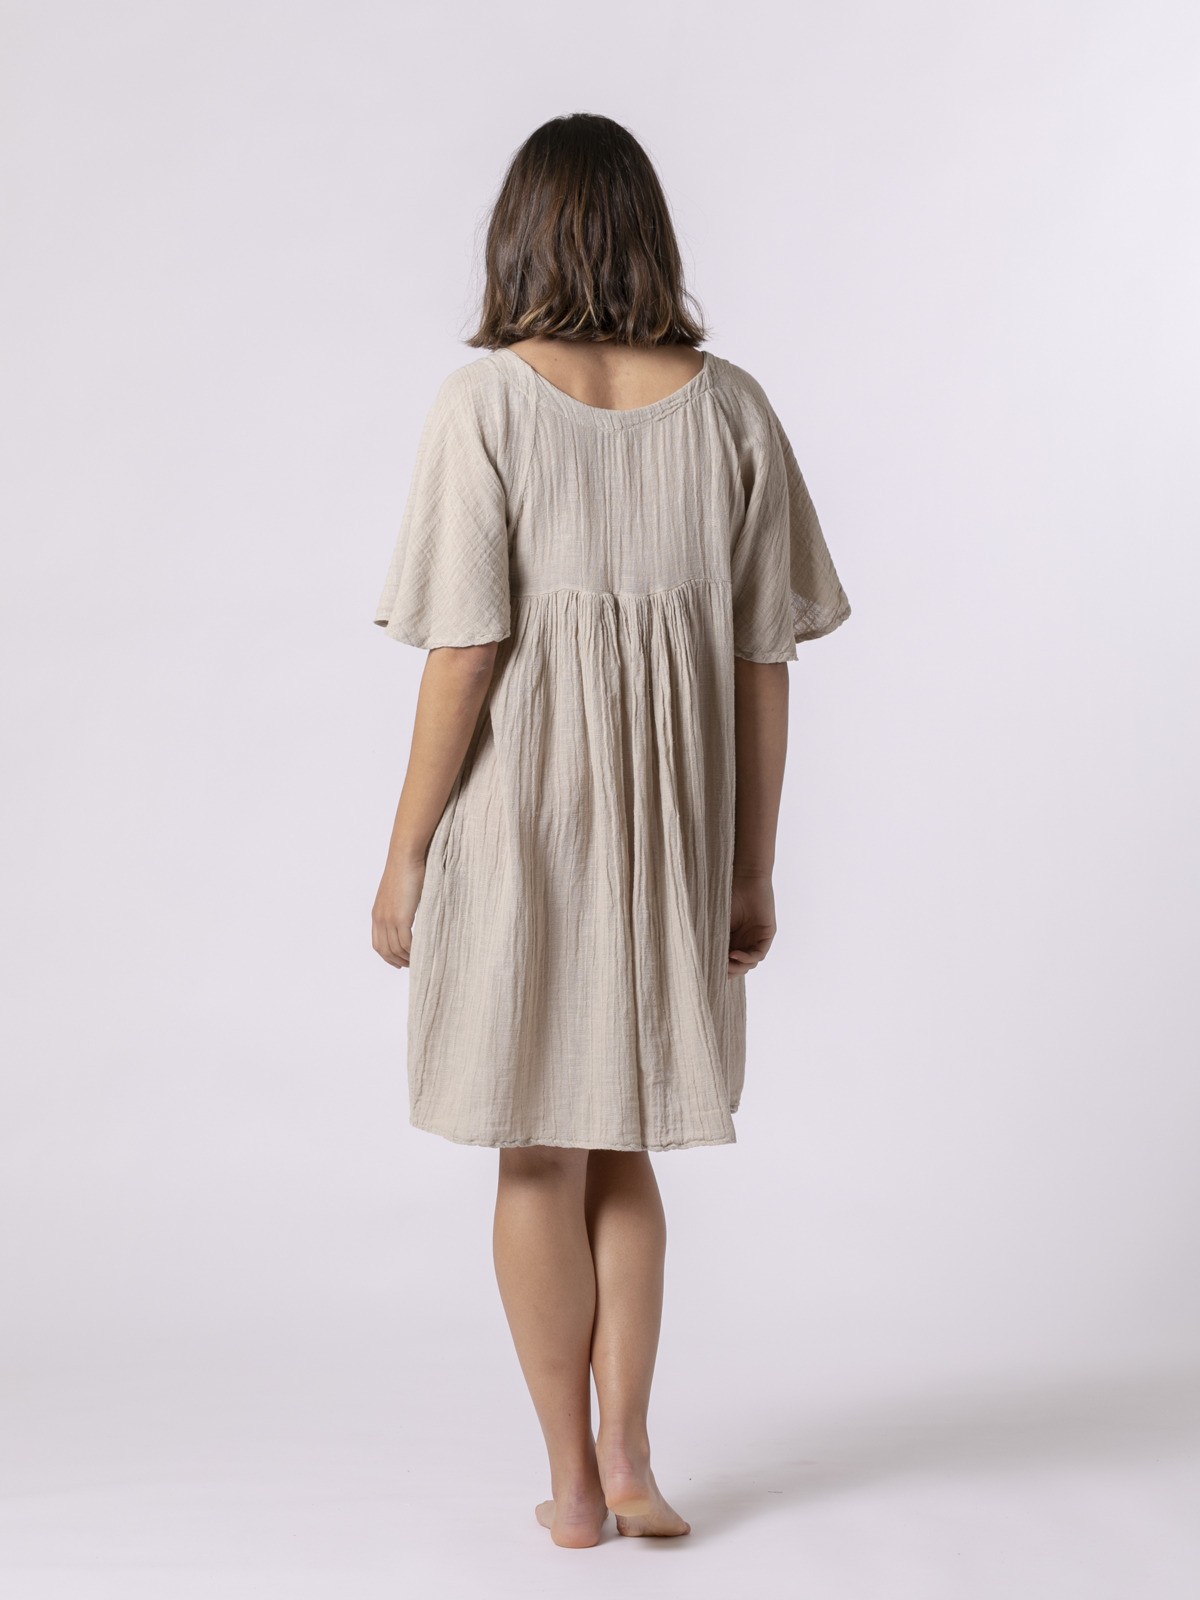 Buy Woman Short linen dress Beige 4x4woman. Fashion women